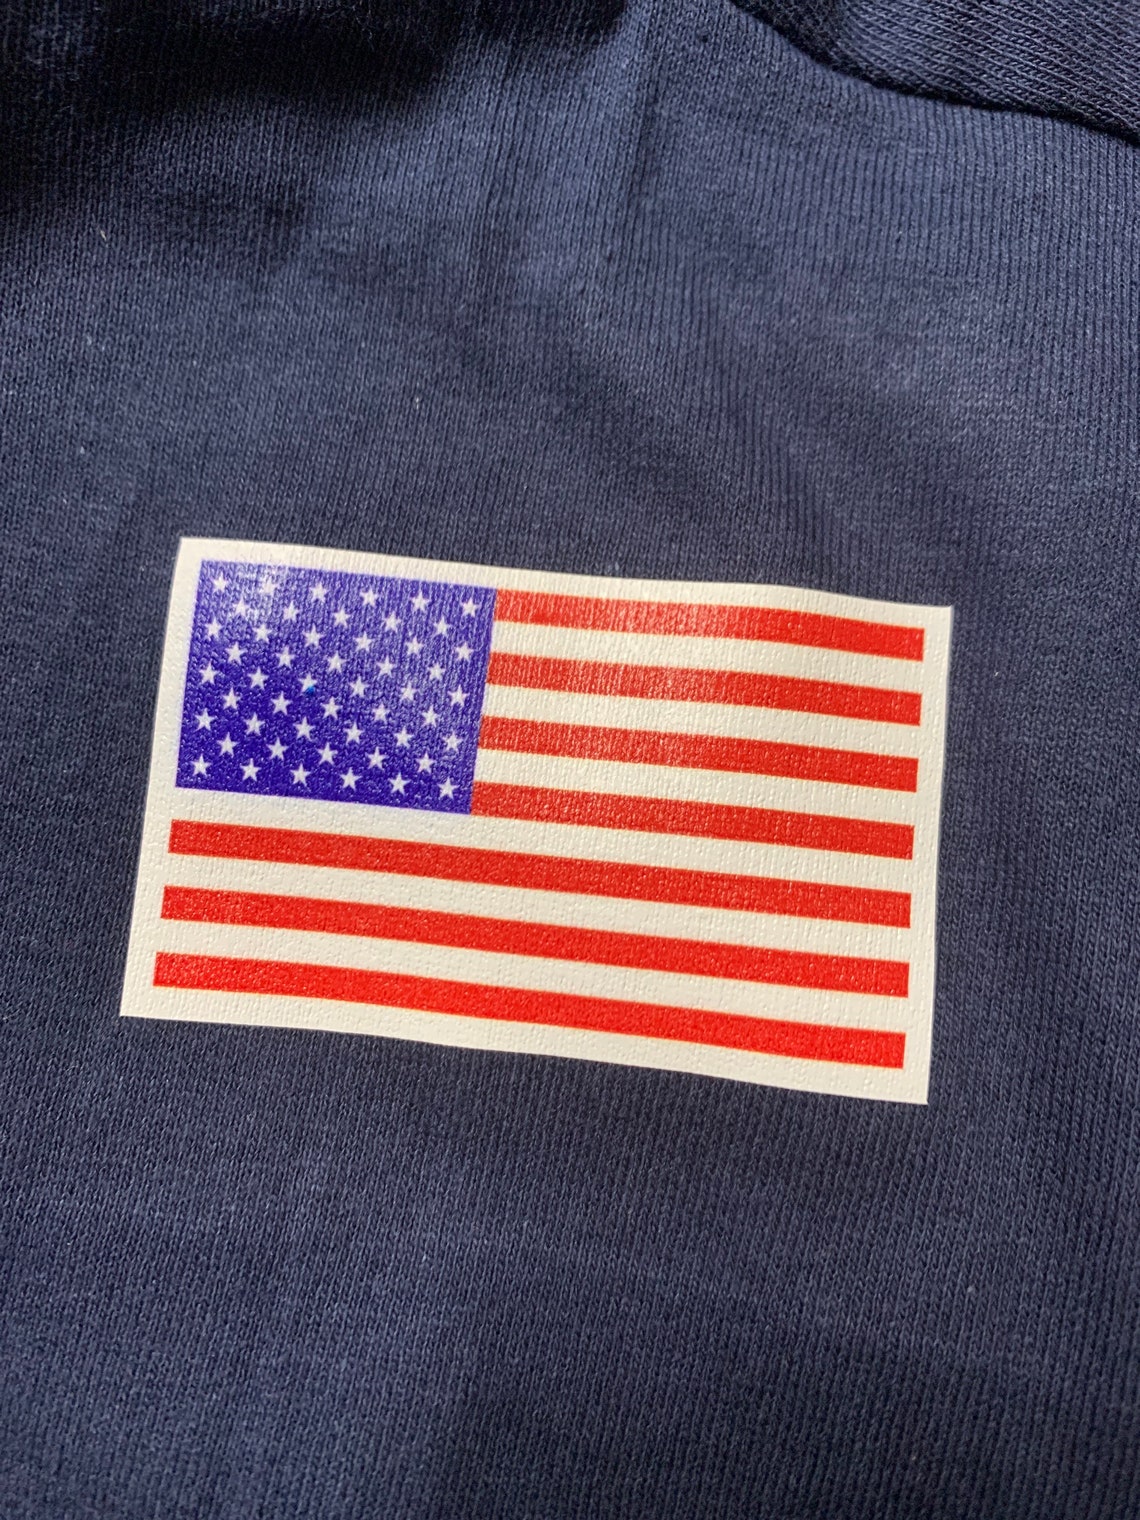 USA Flag Heat Transfer pack of 10 | Etsy